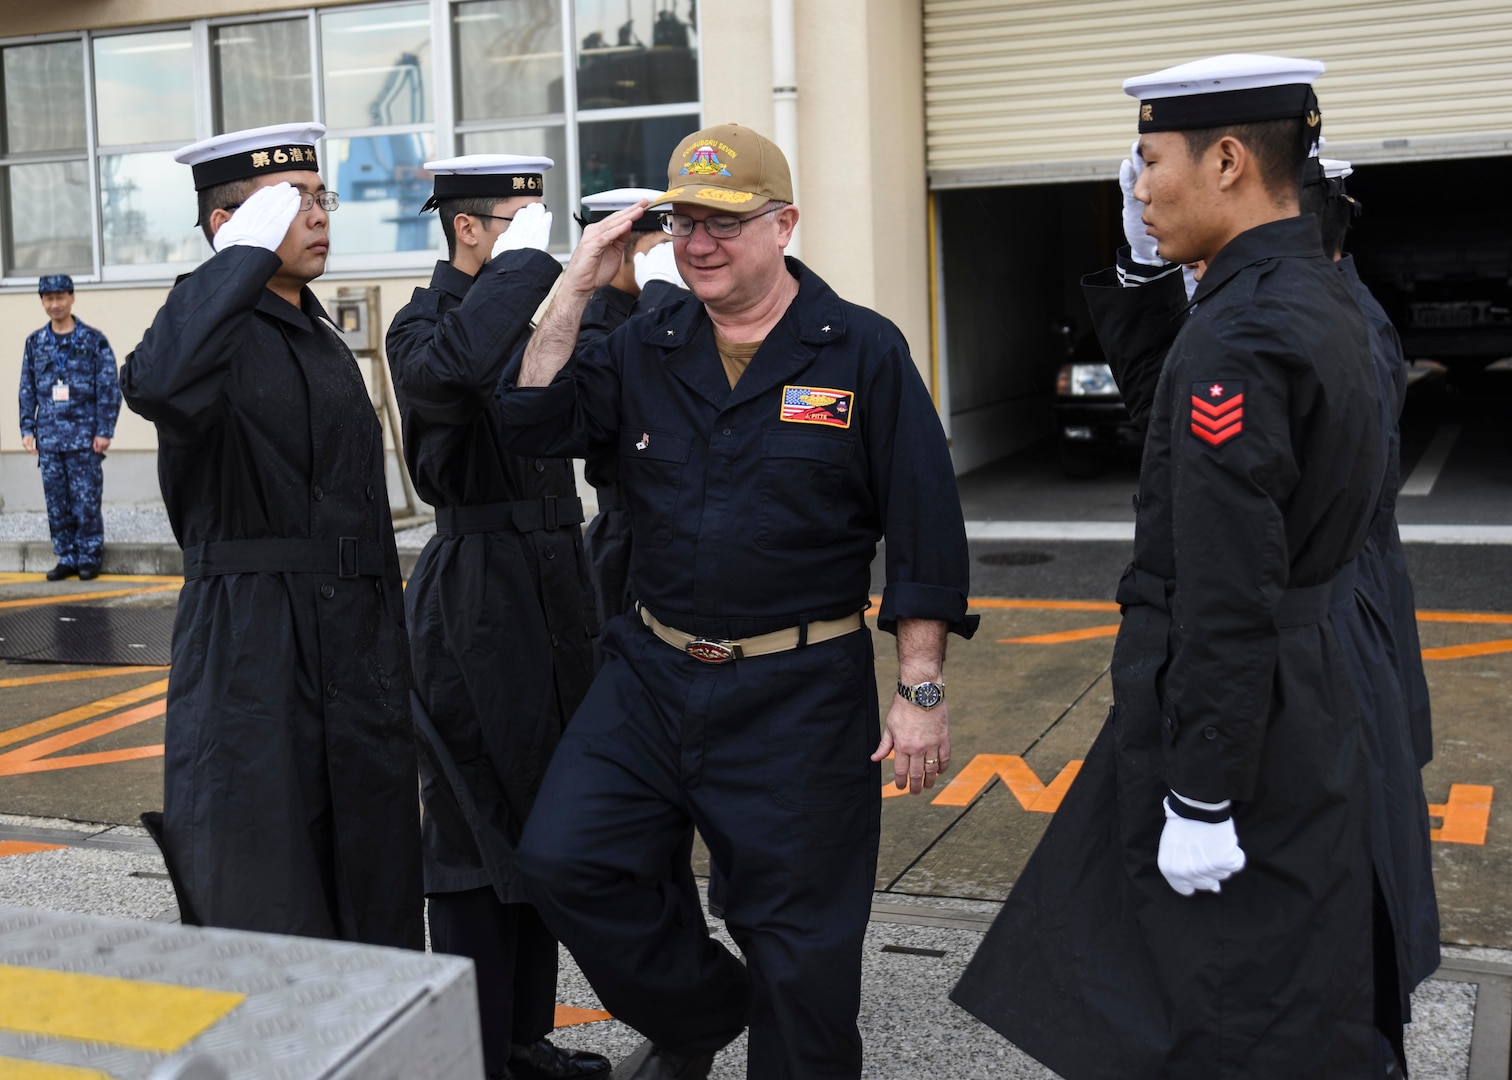  Maritime Self-Defense Force Chief of Maritime Staff Chairman  Ii Class : Hobbies